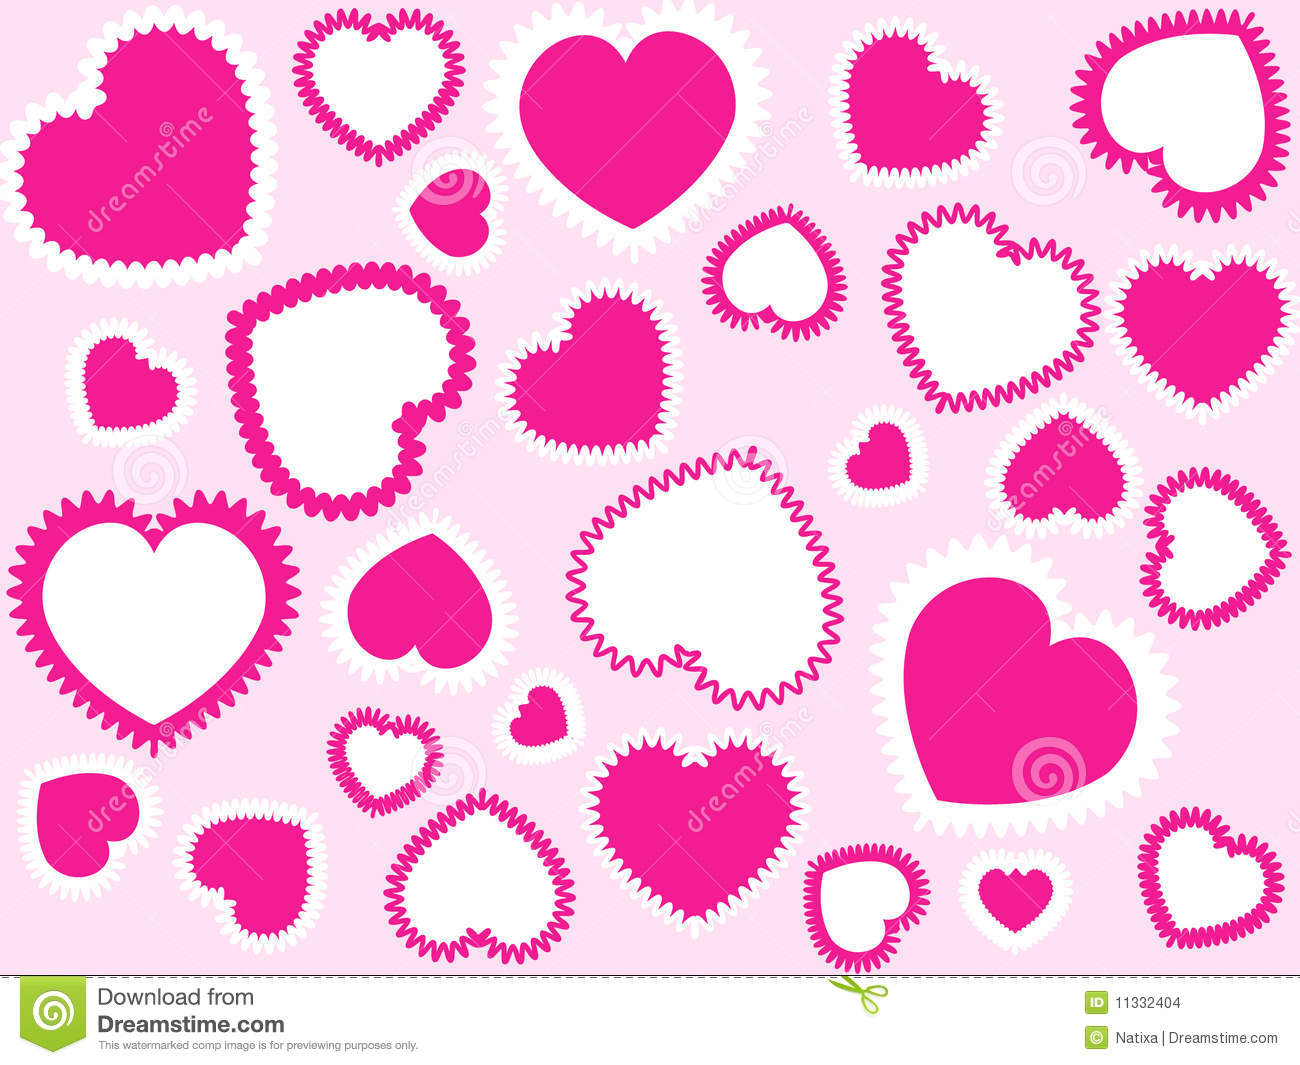 Pink Hearts Background Jpg